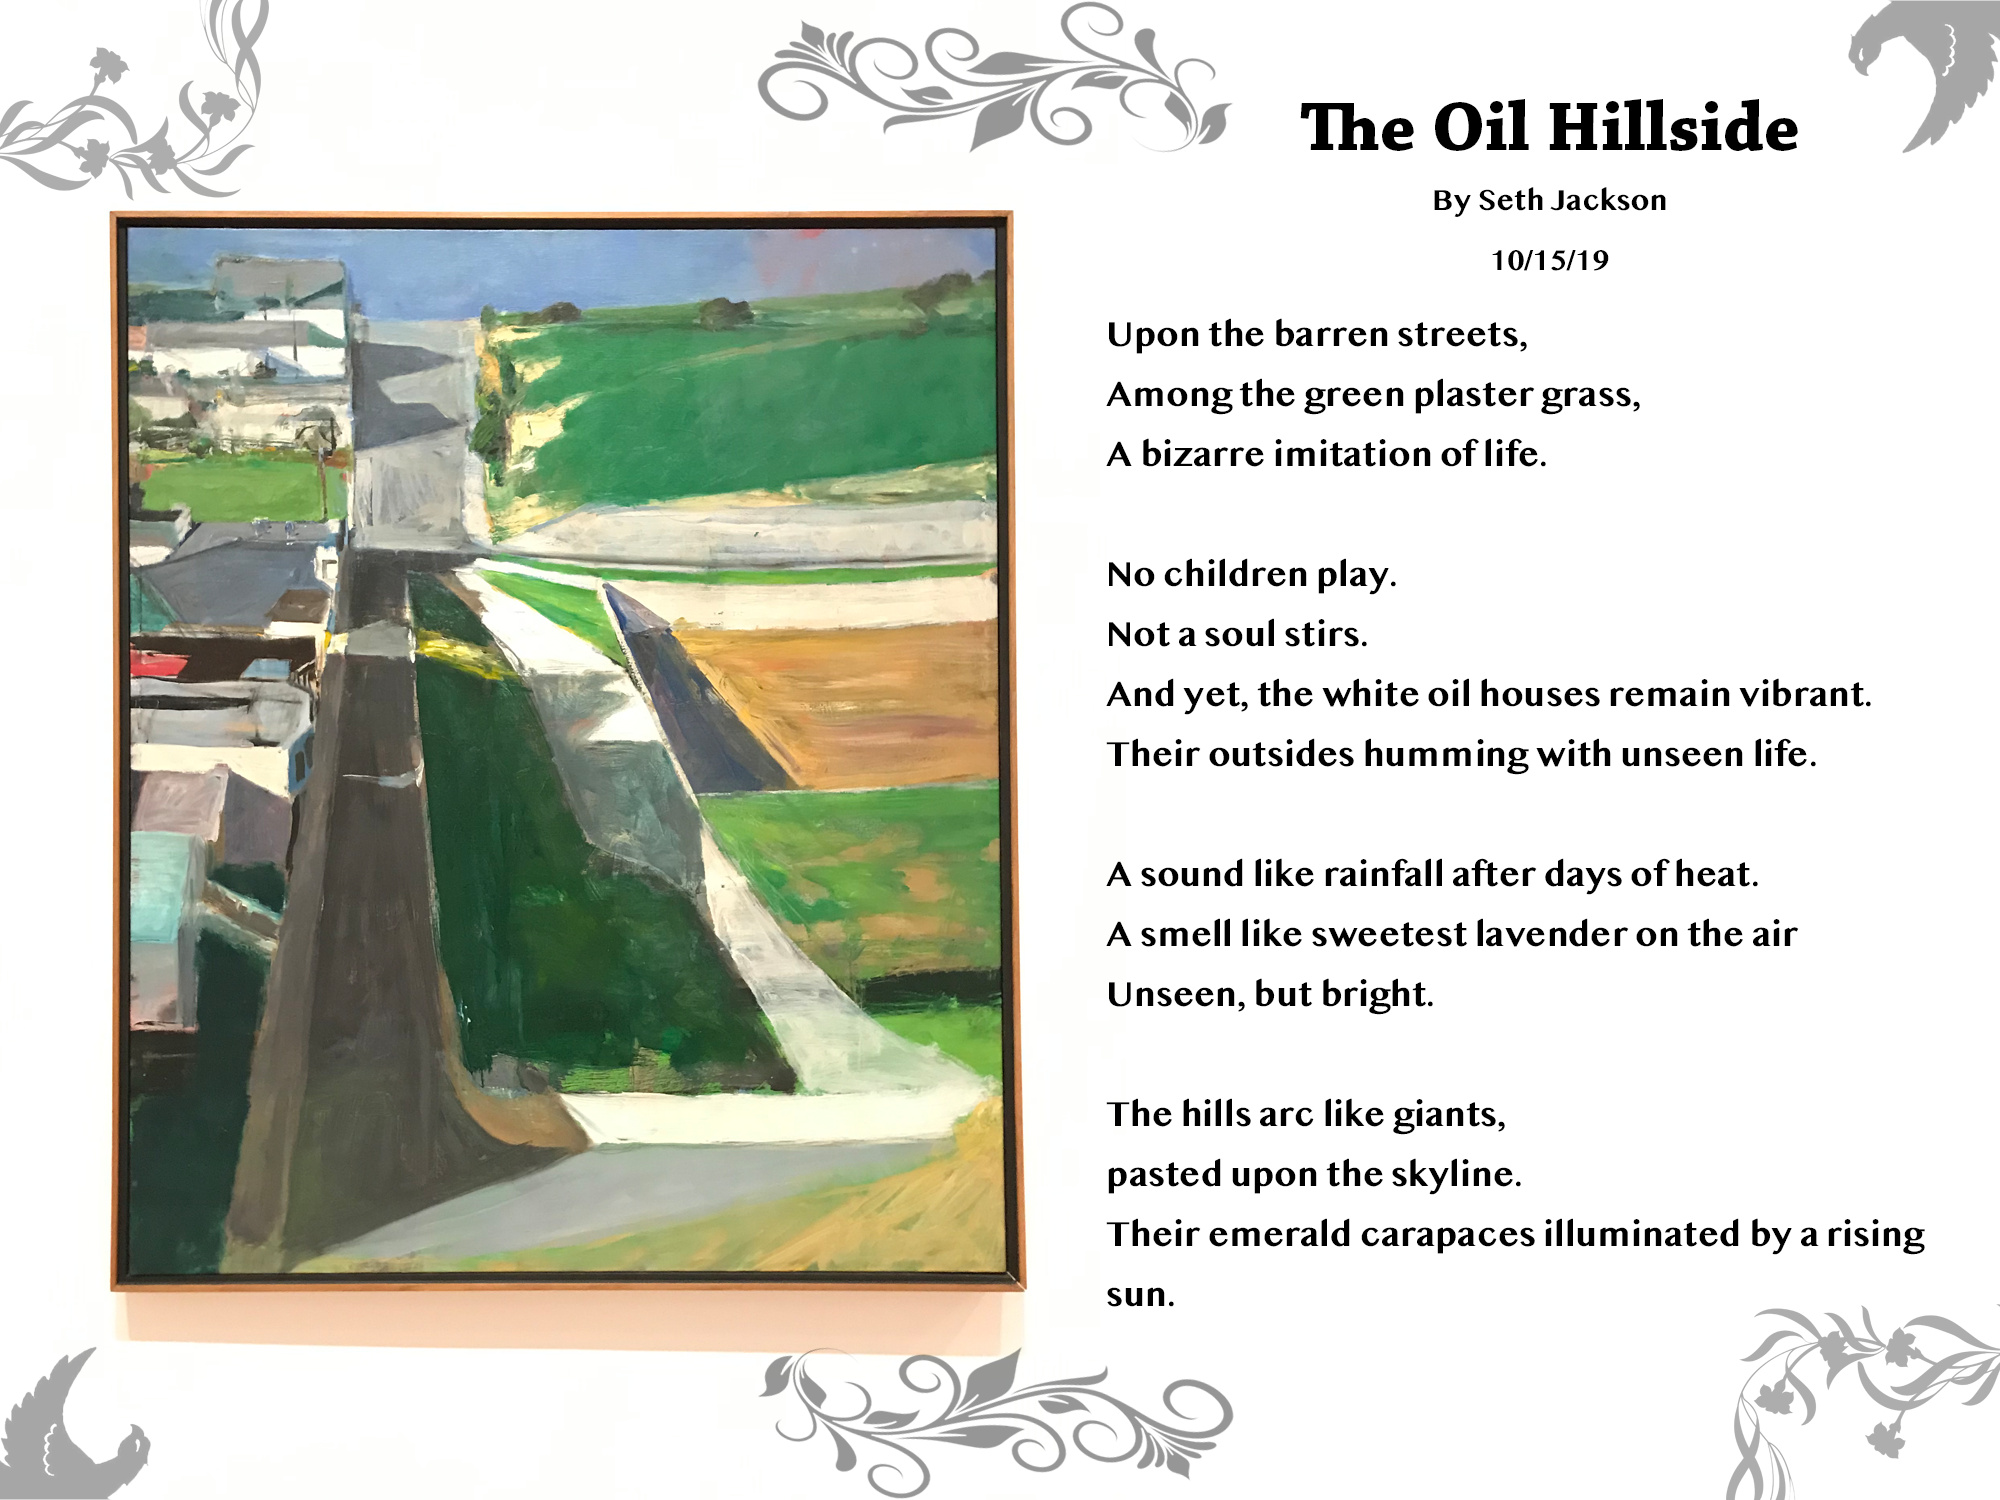 Poem by Seth Jackson The Oil Hillside